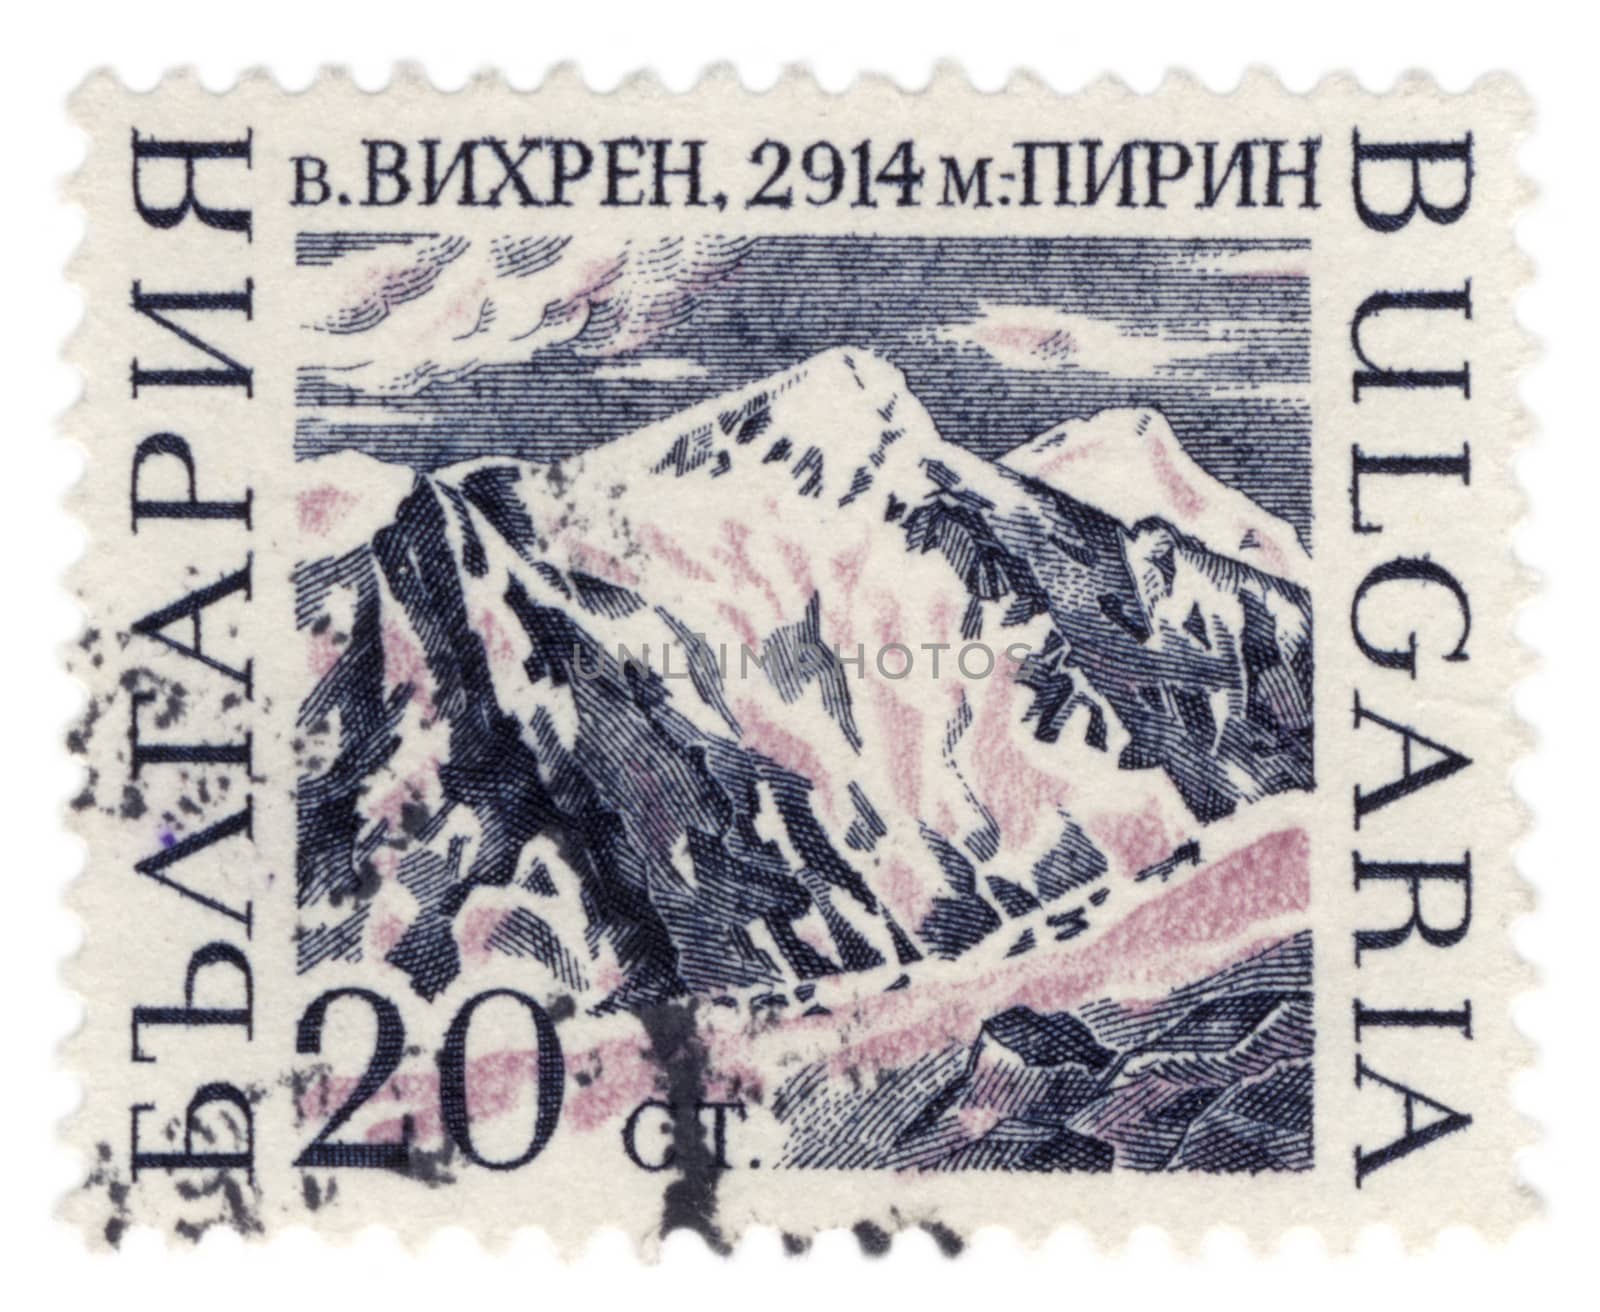 Bulgaria - CIRCA 1960s: A post stamp printed in Bulgaria shows Mount Vihren in Pirin Mountain, circa 1960s